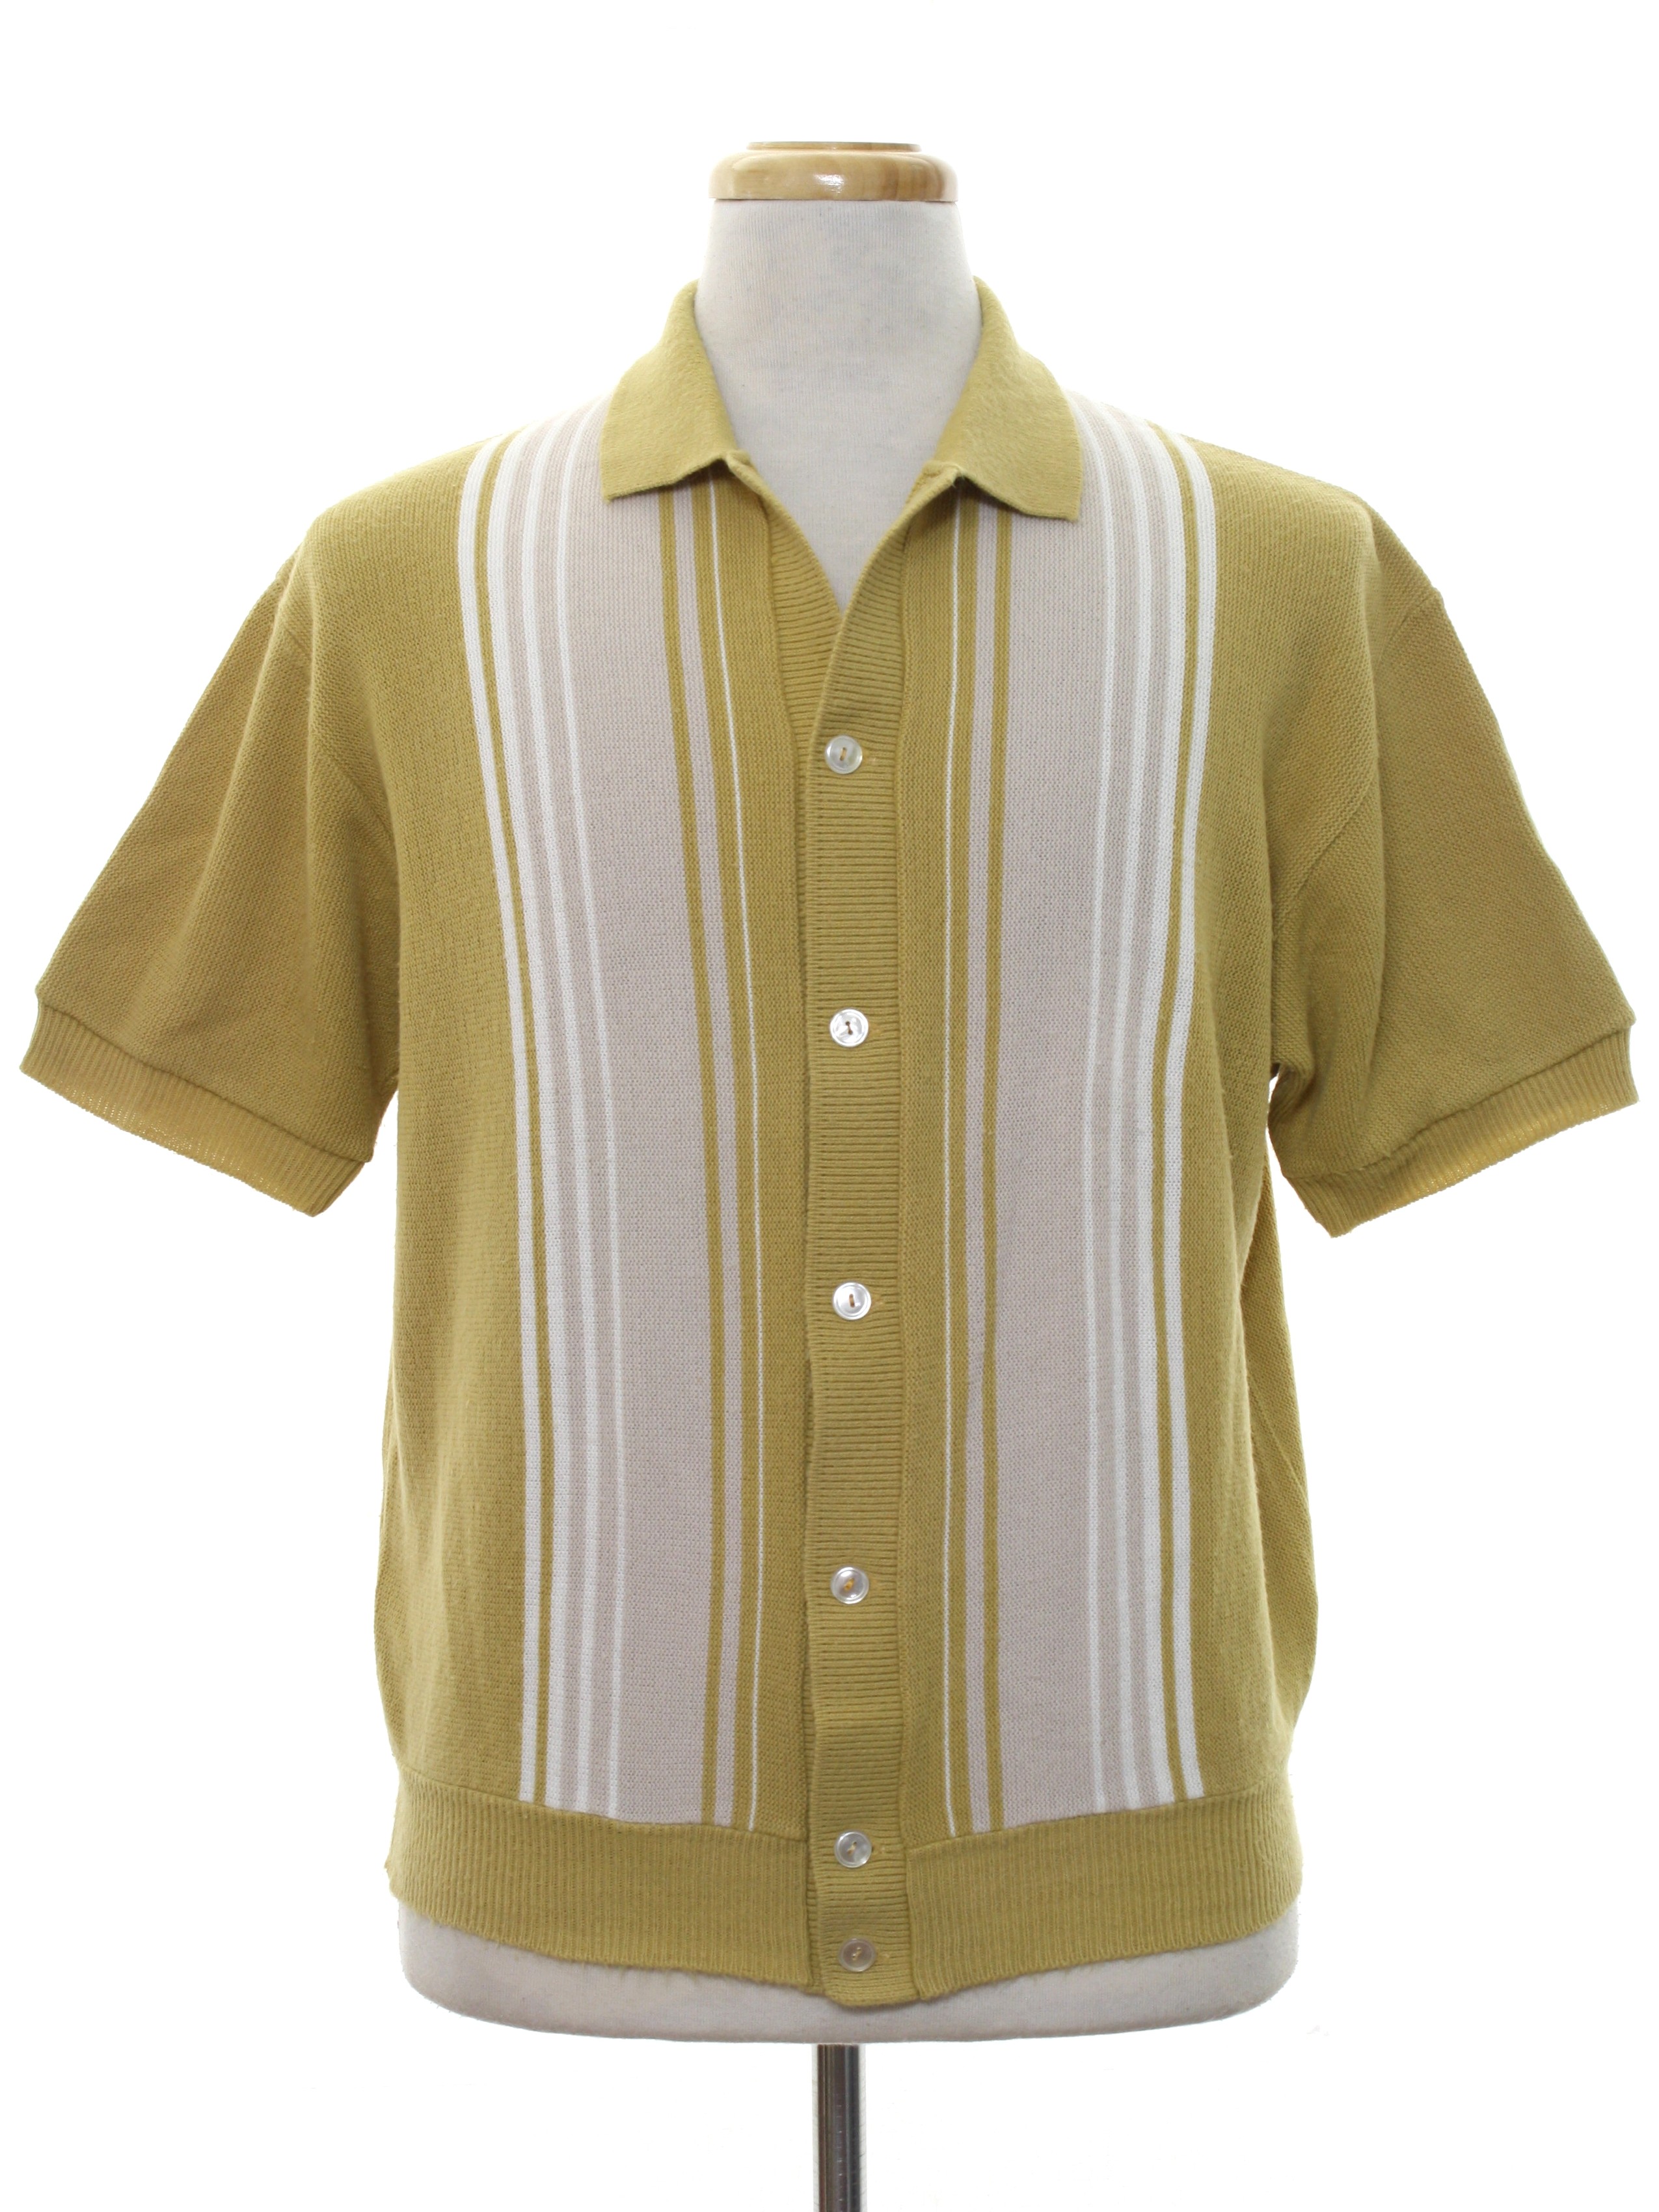 1960's Retro Knit Shirt: Early 60s -Hartog of California- Mens gold